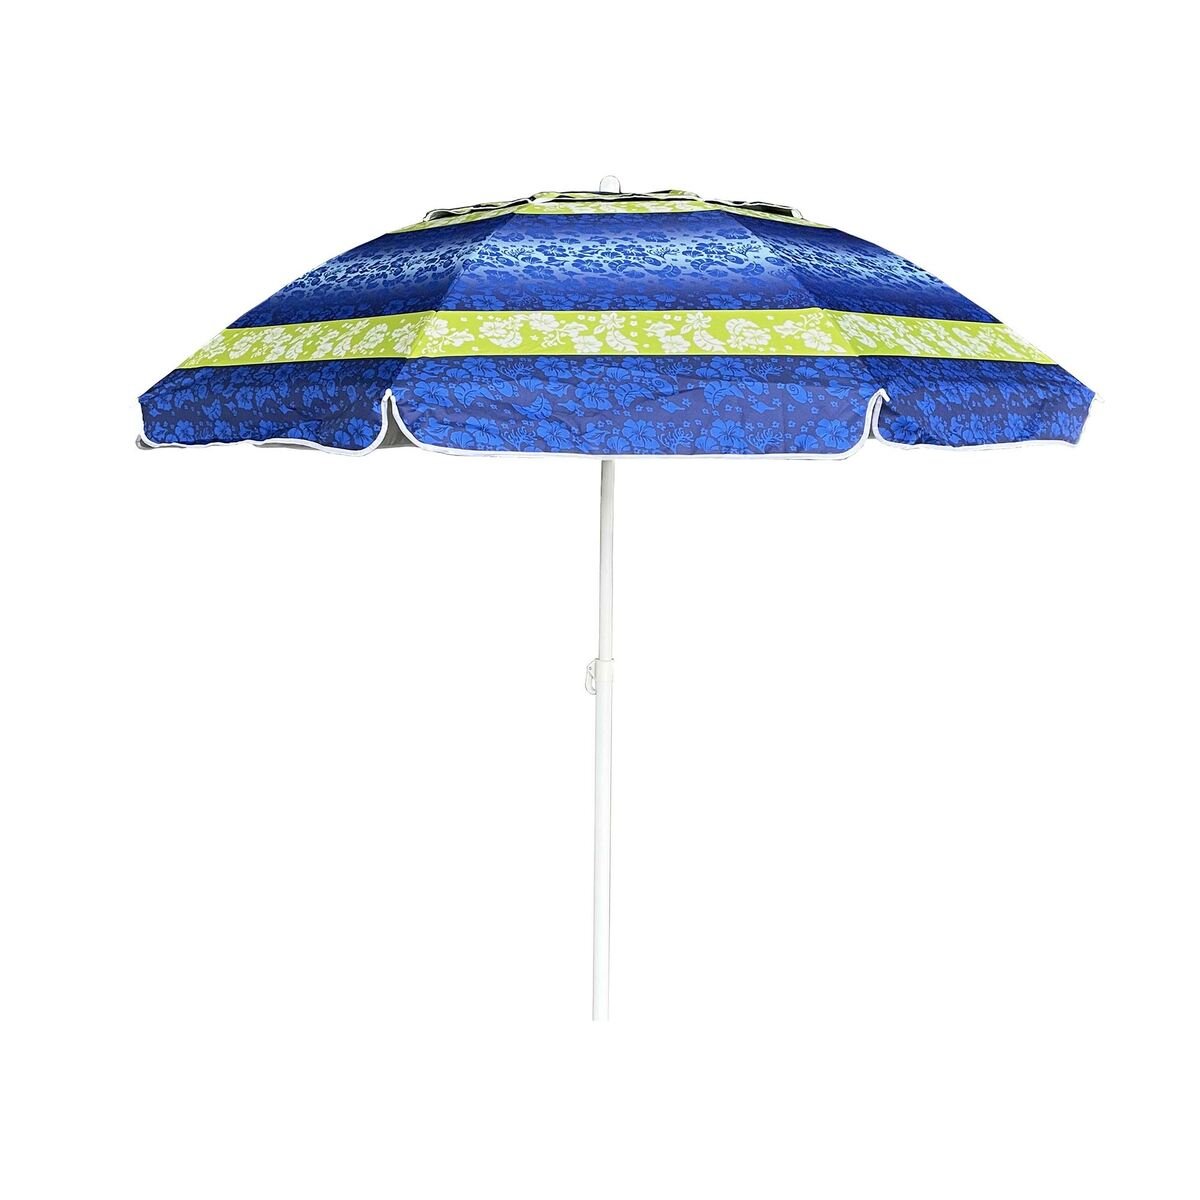 Royal Relax Beach Umbrella HYH-182 2mtr Assorted Design & Color